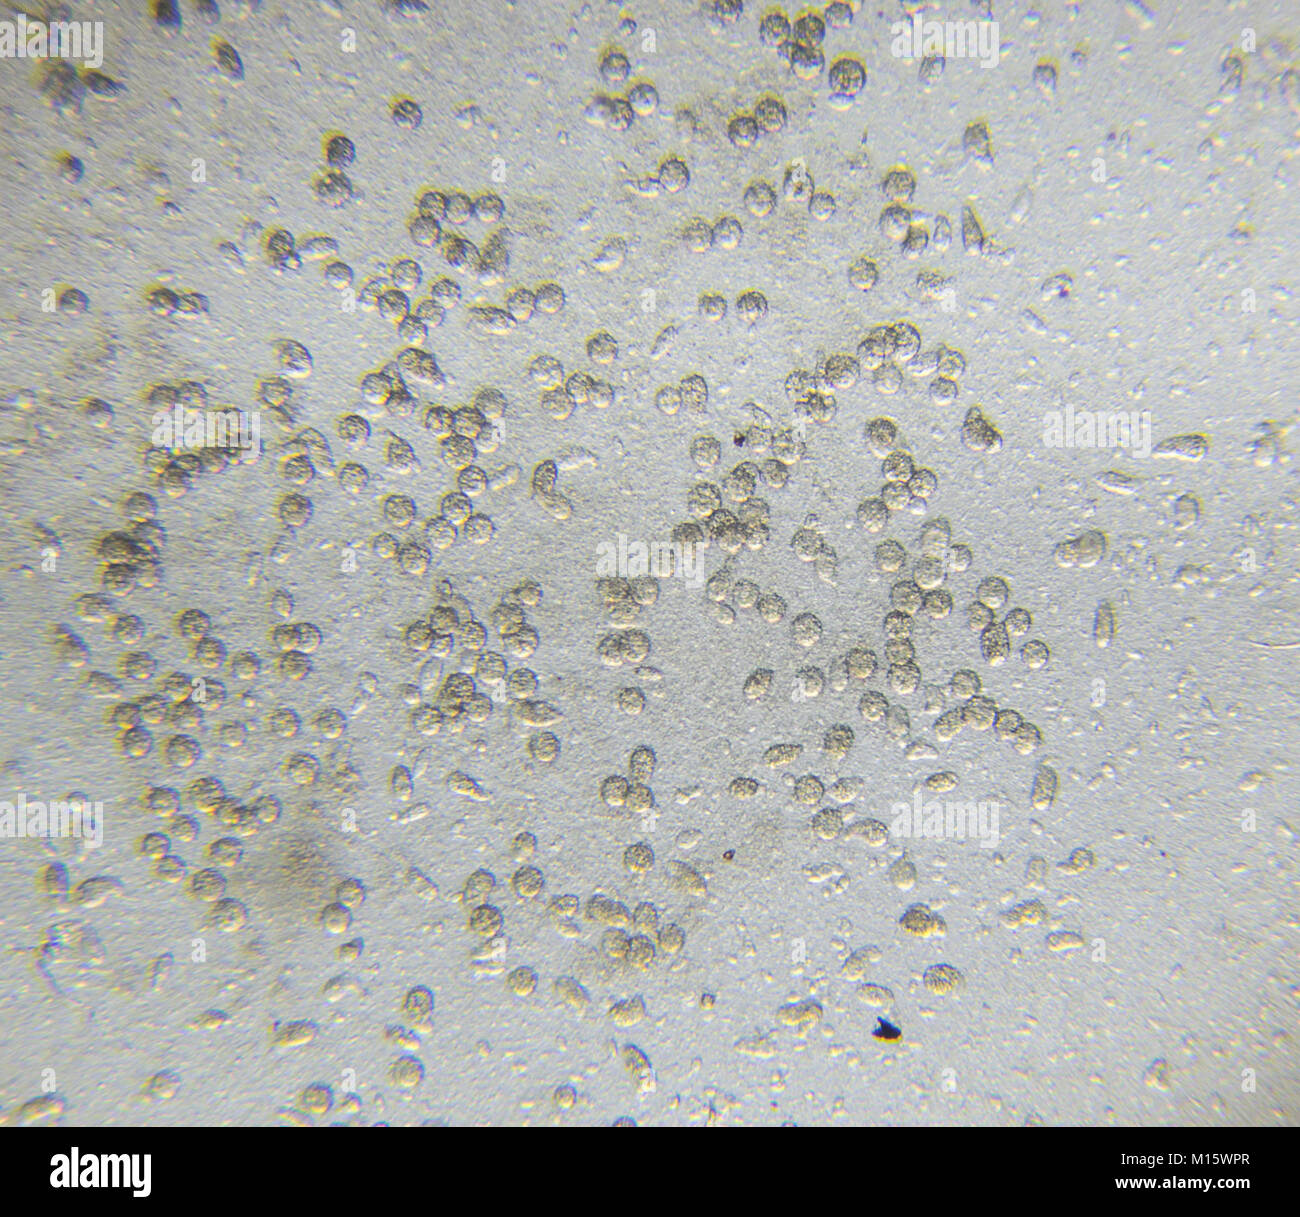 Chlamydomonas algae, paramecium ciliates and many bacteria through microscope Stock Photo